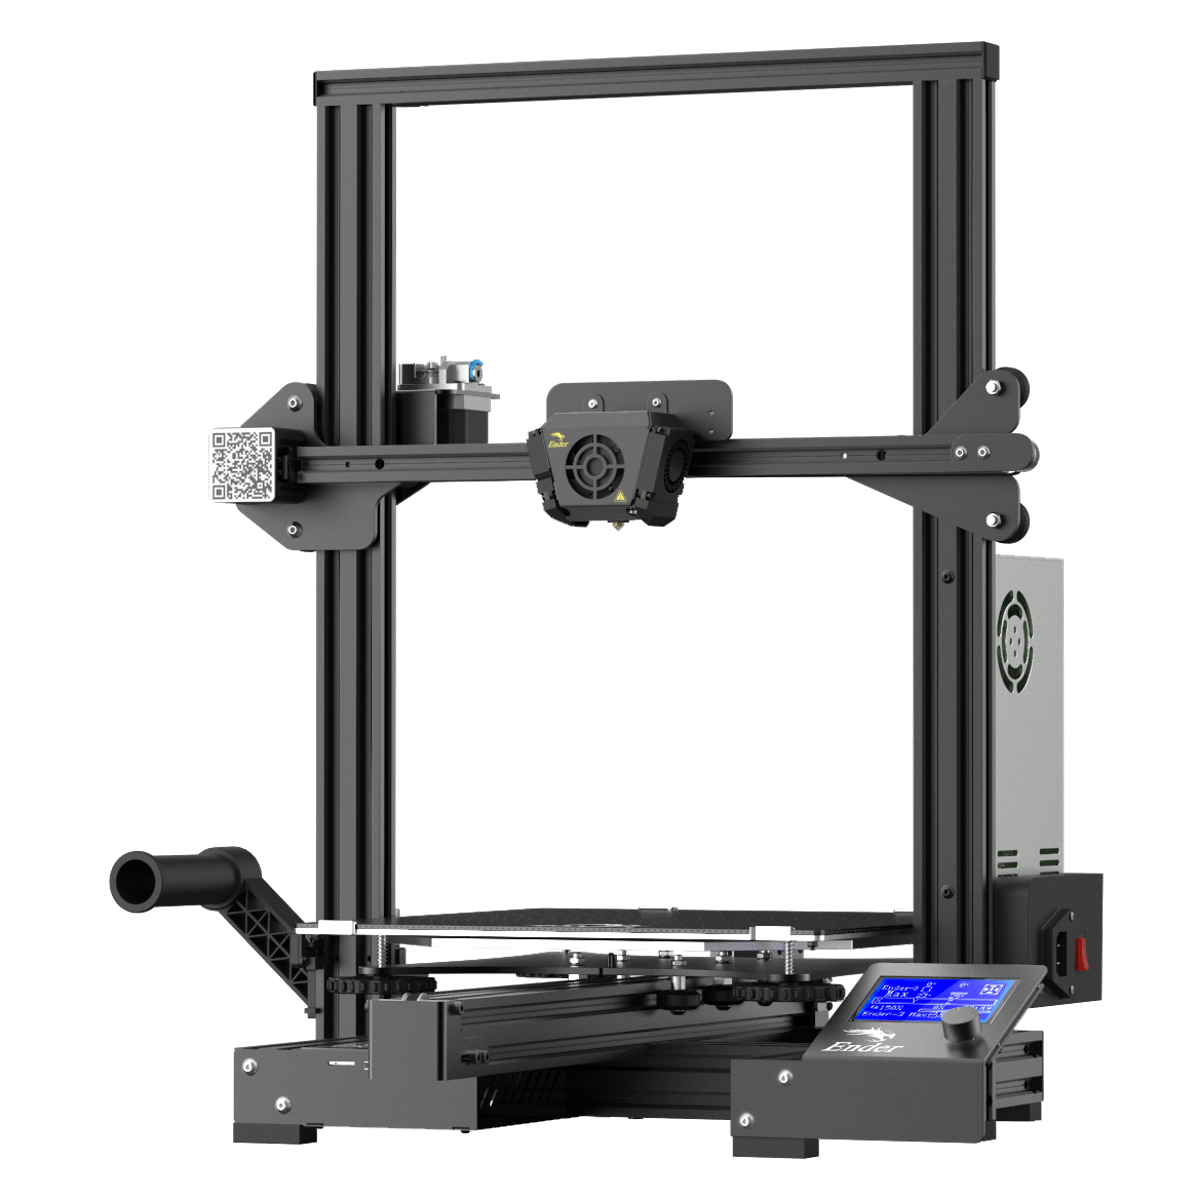 Køb Creality Ender 3 Max 3d printer - Pris 2899.00 kr.